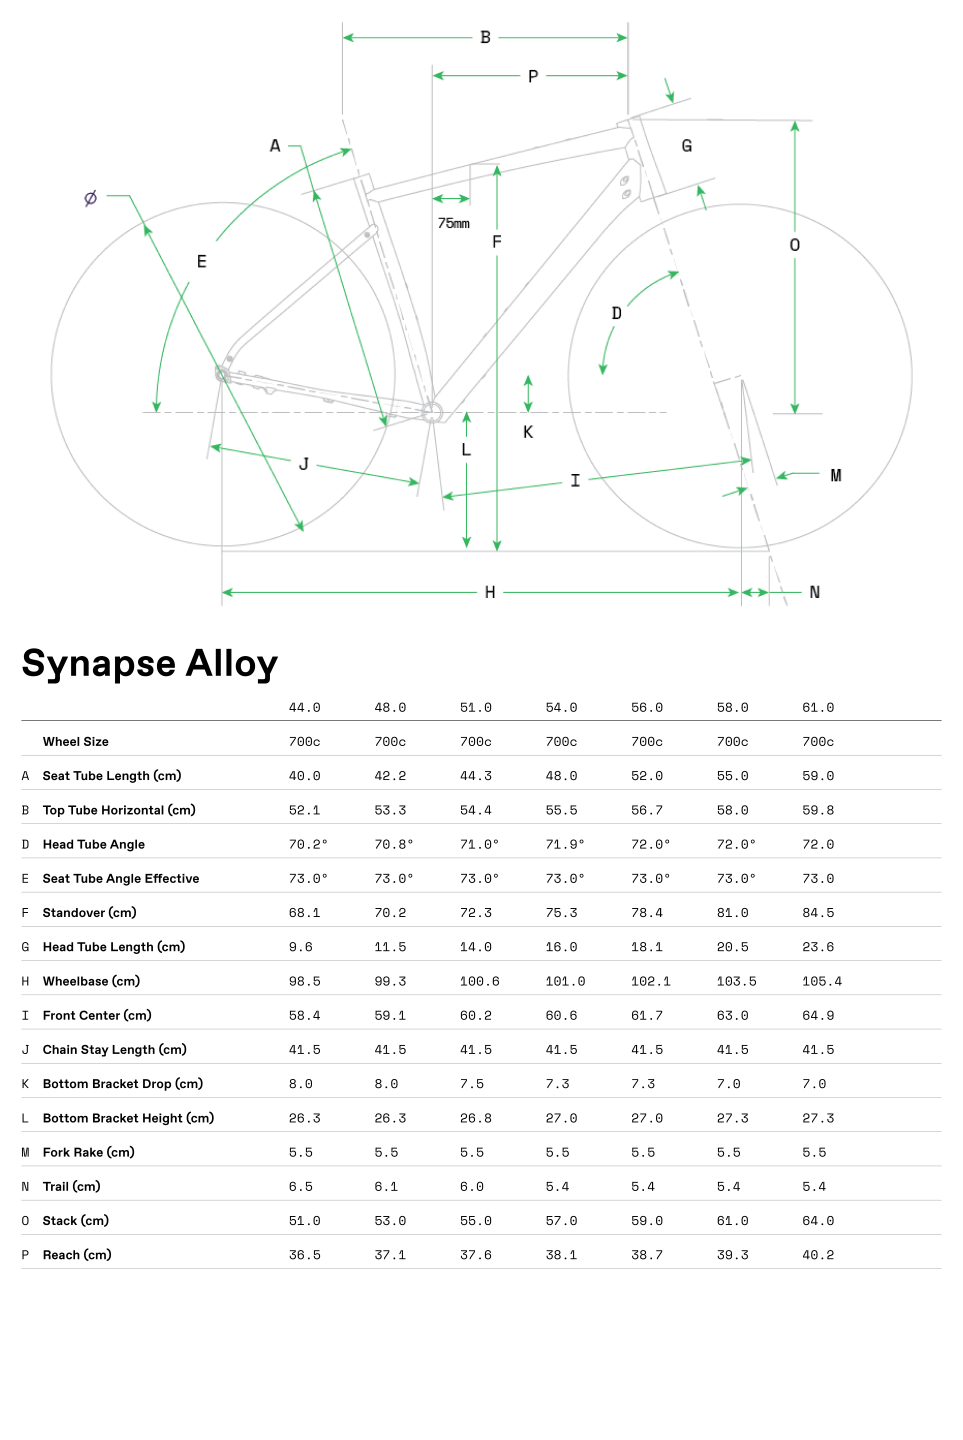 Geometrie Synapse Alloy